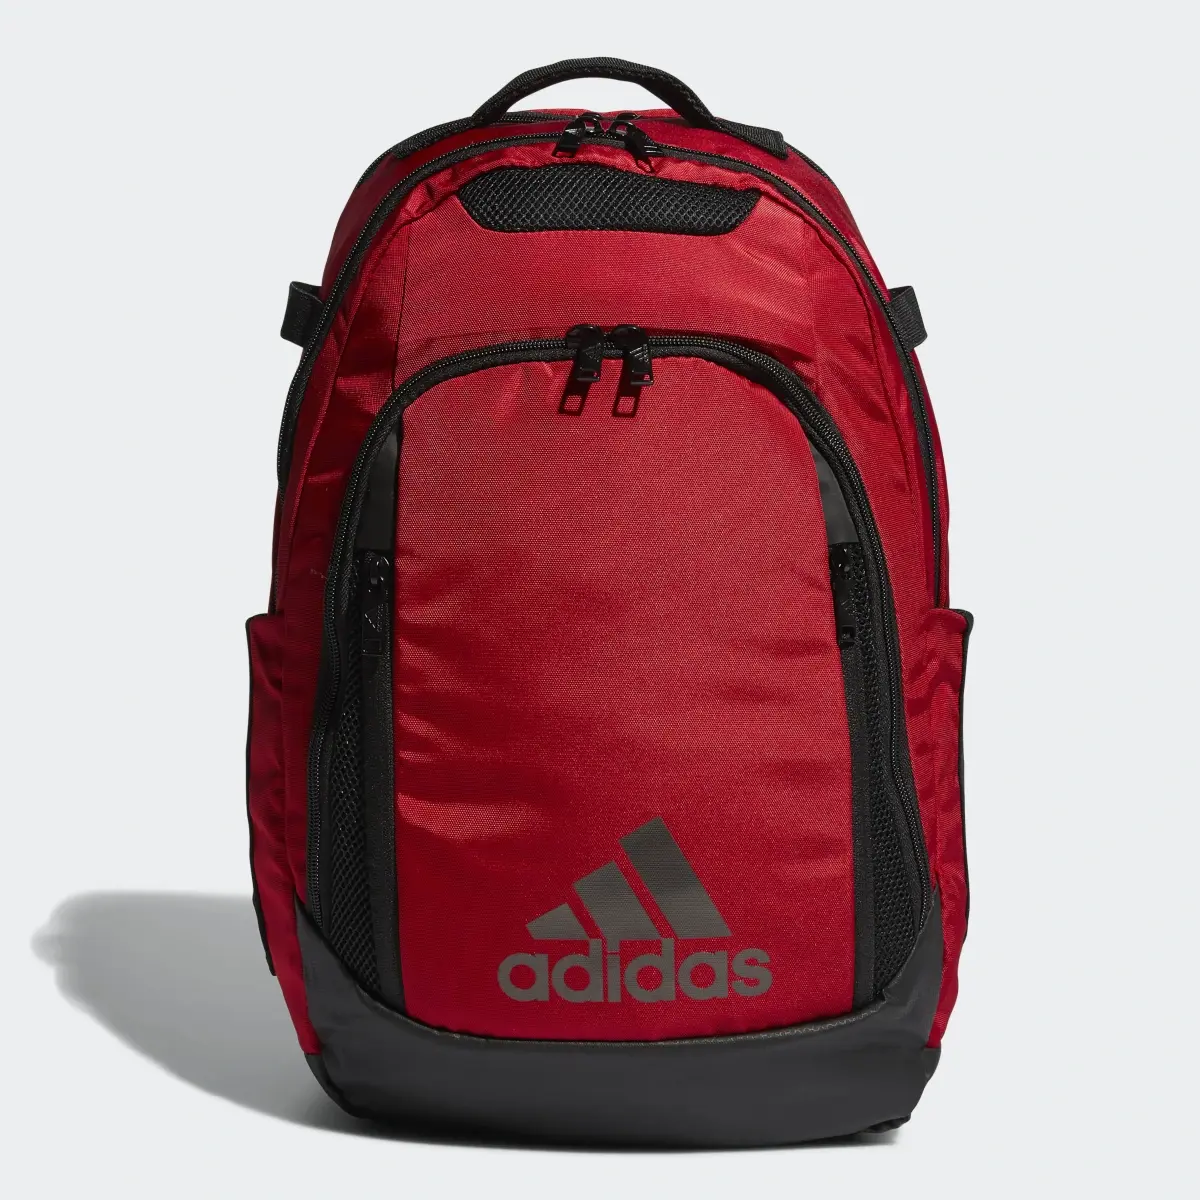 Adidas 5-Star Team Backpack. 2